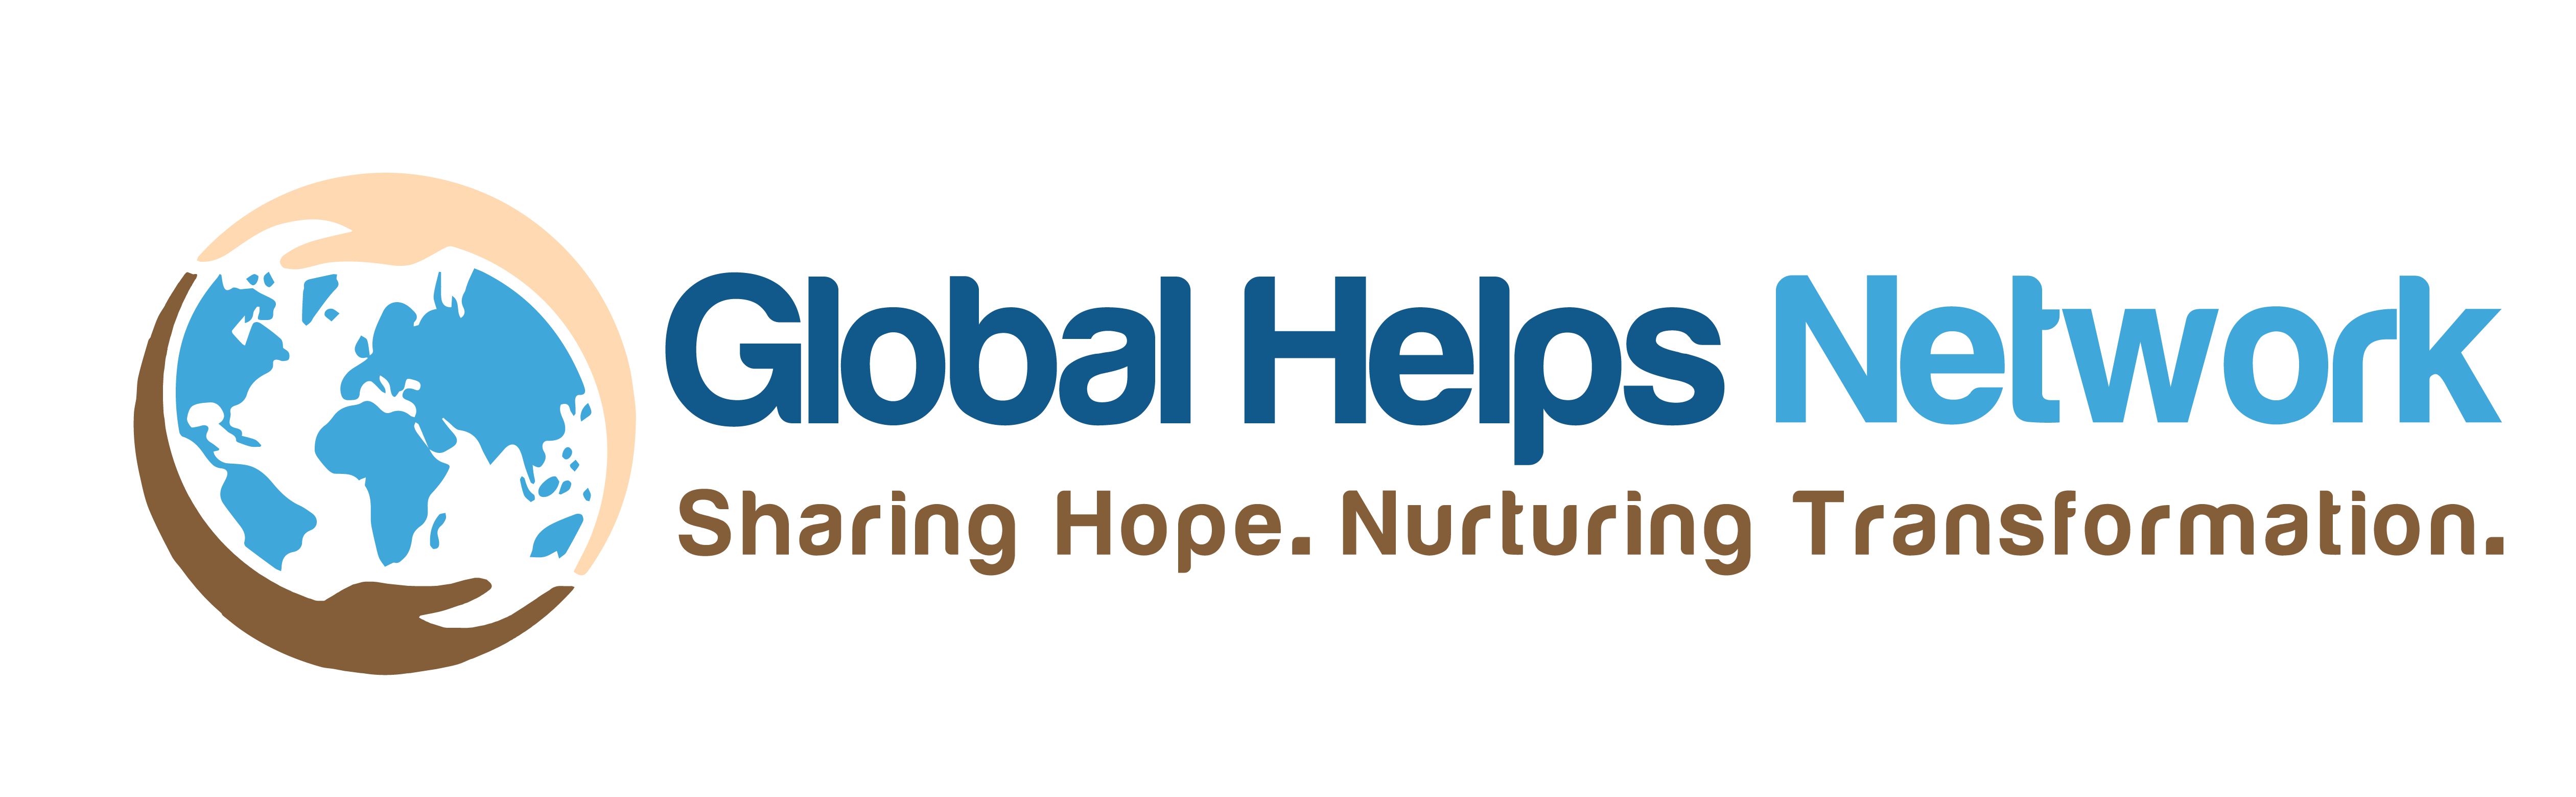 Global Helps Network logo